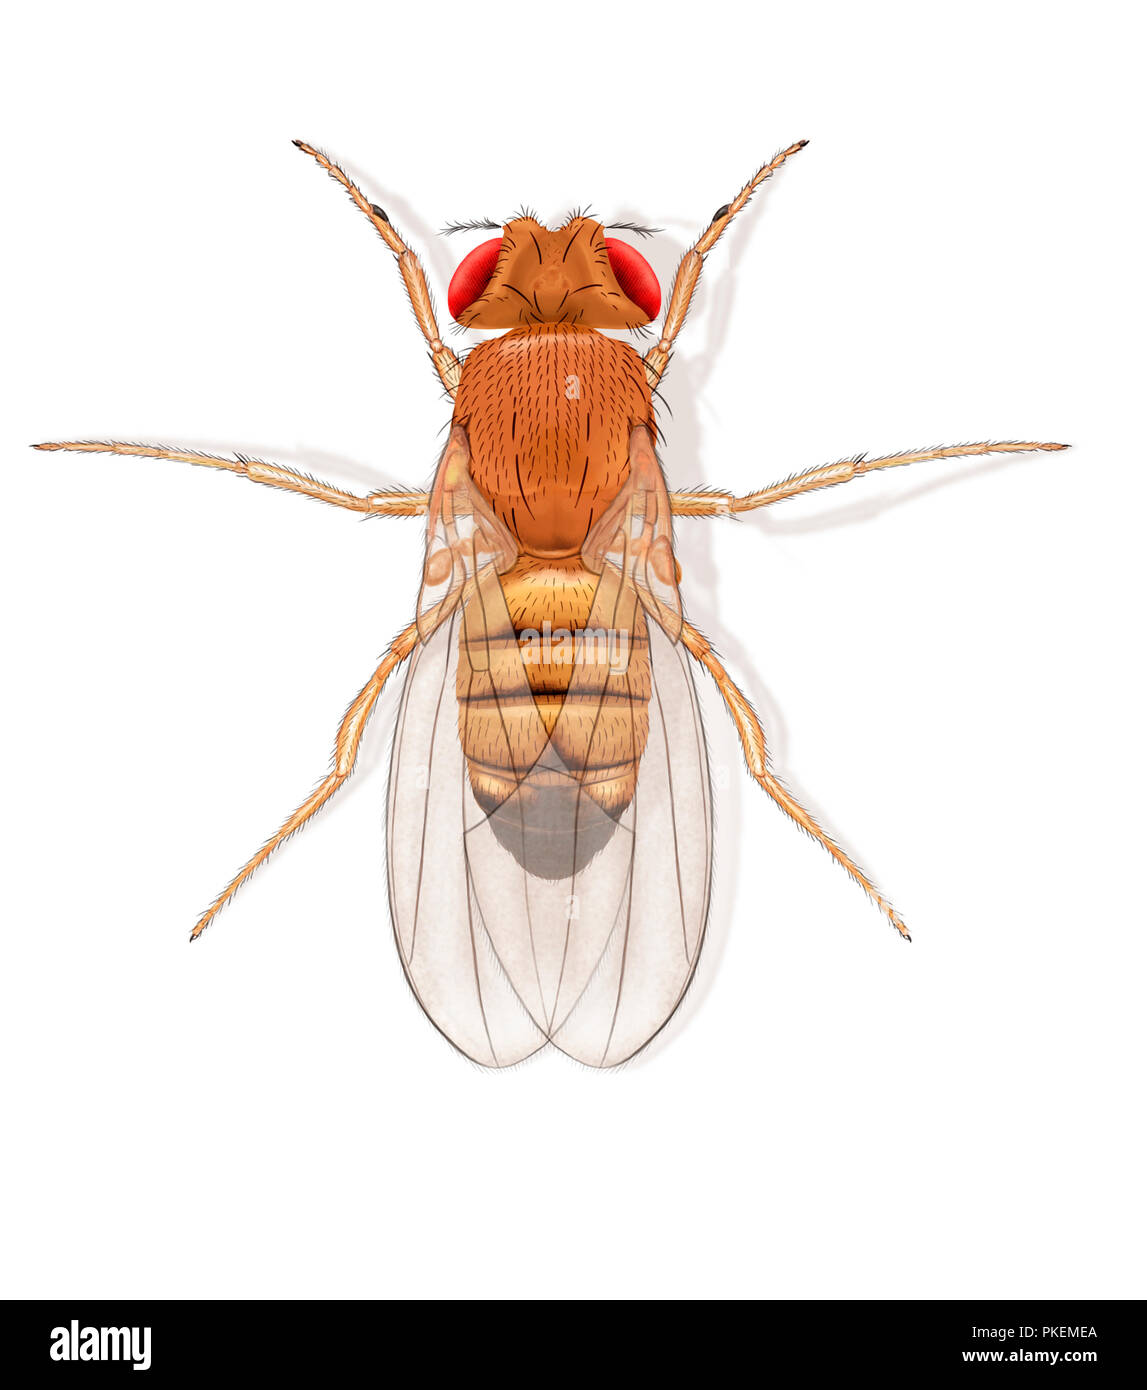 Digital illustration of a fruit fly Stock Photo